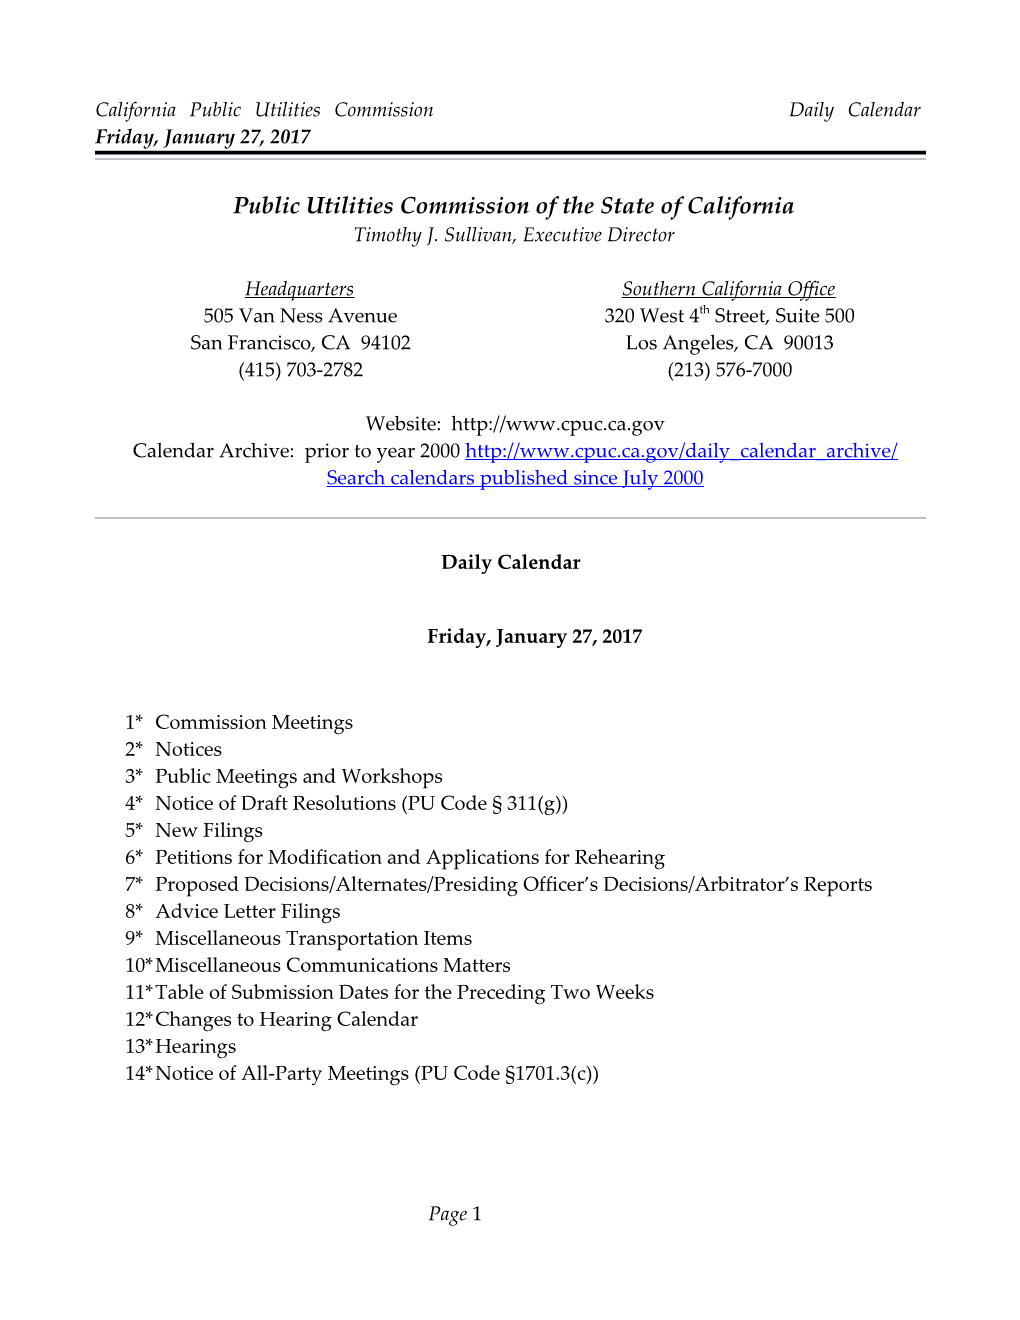 California Public Utilities Commission Daily Calendar Friday, January 27, 2017